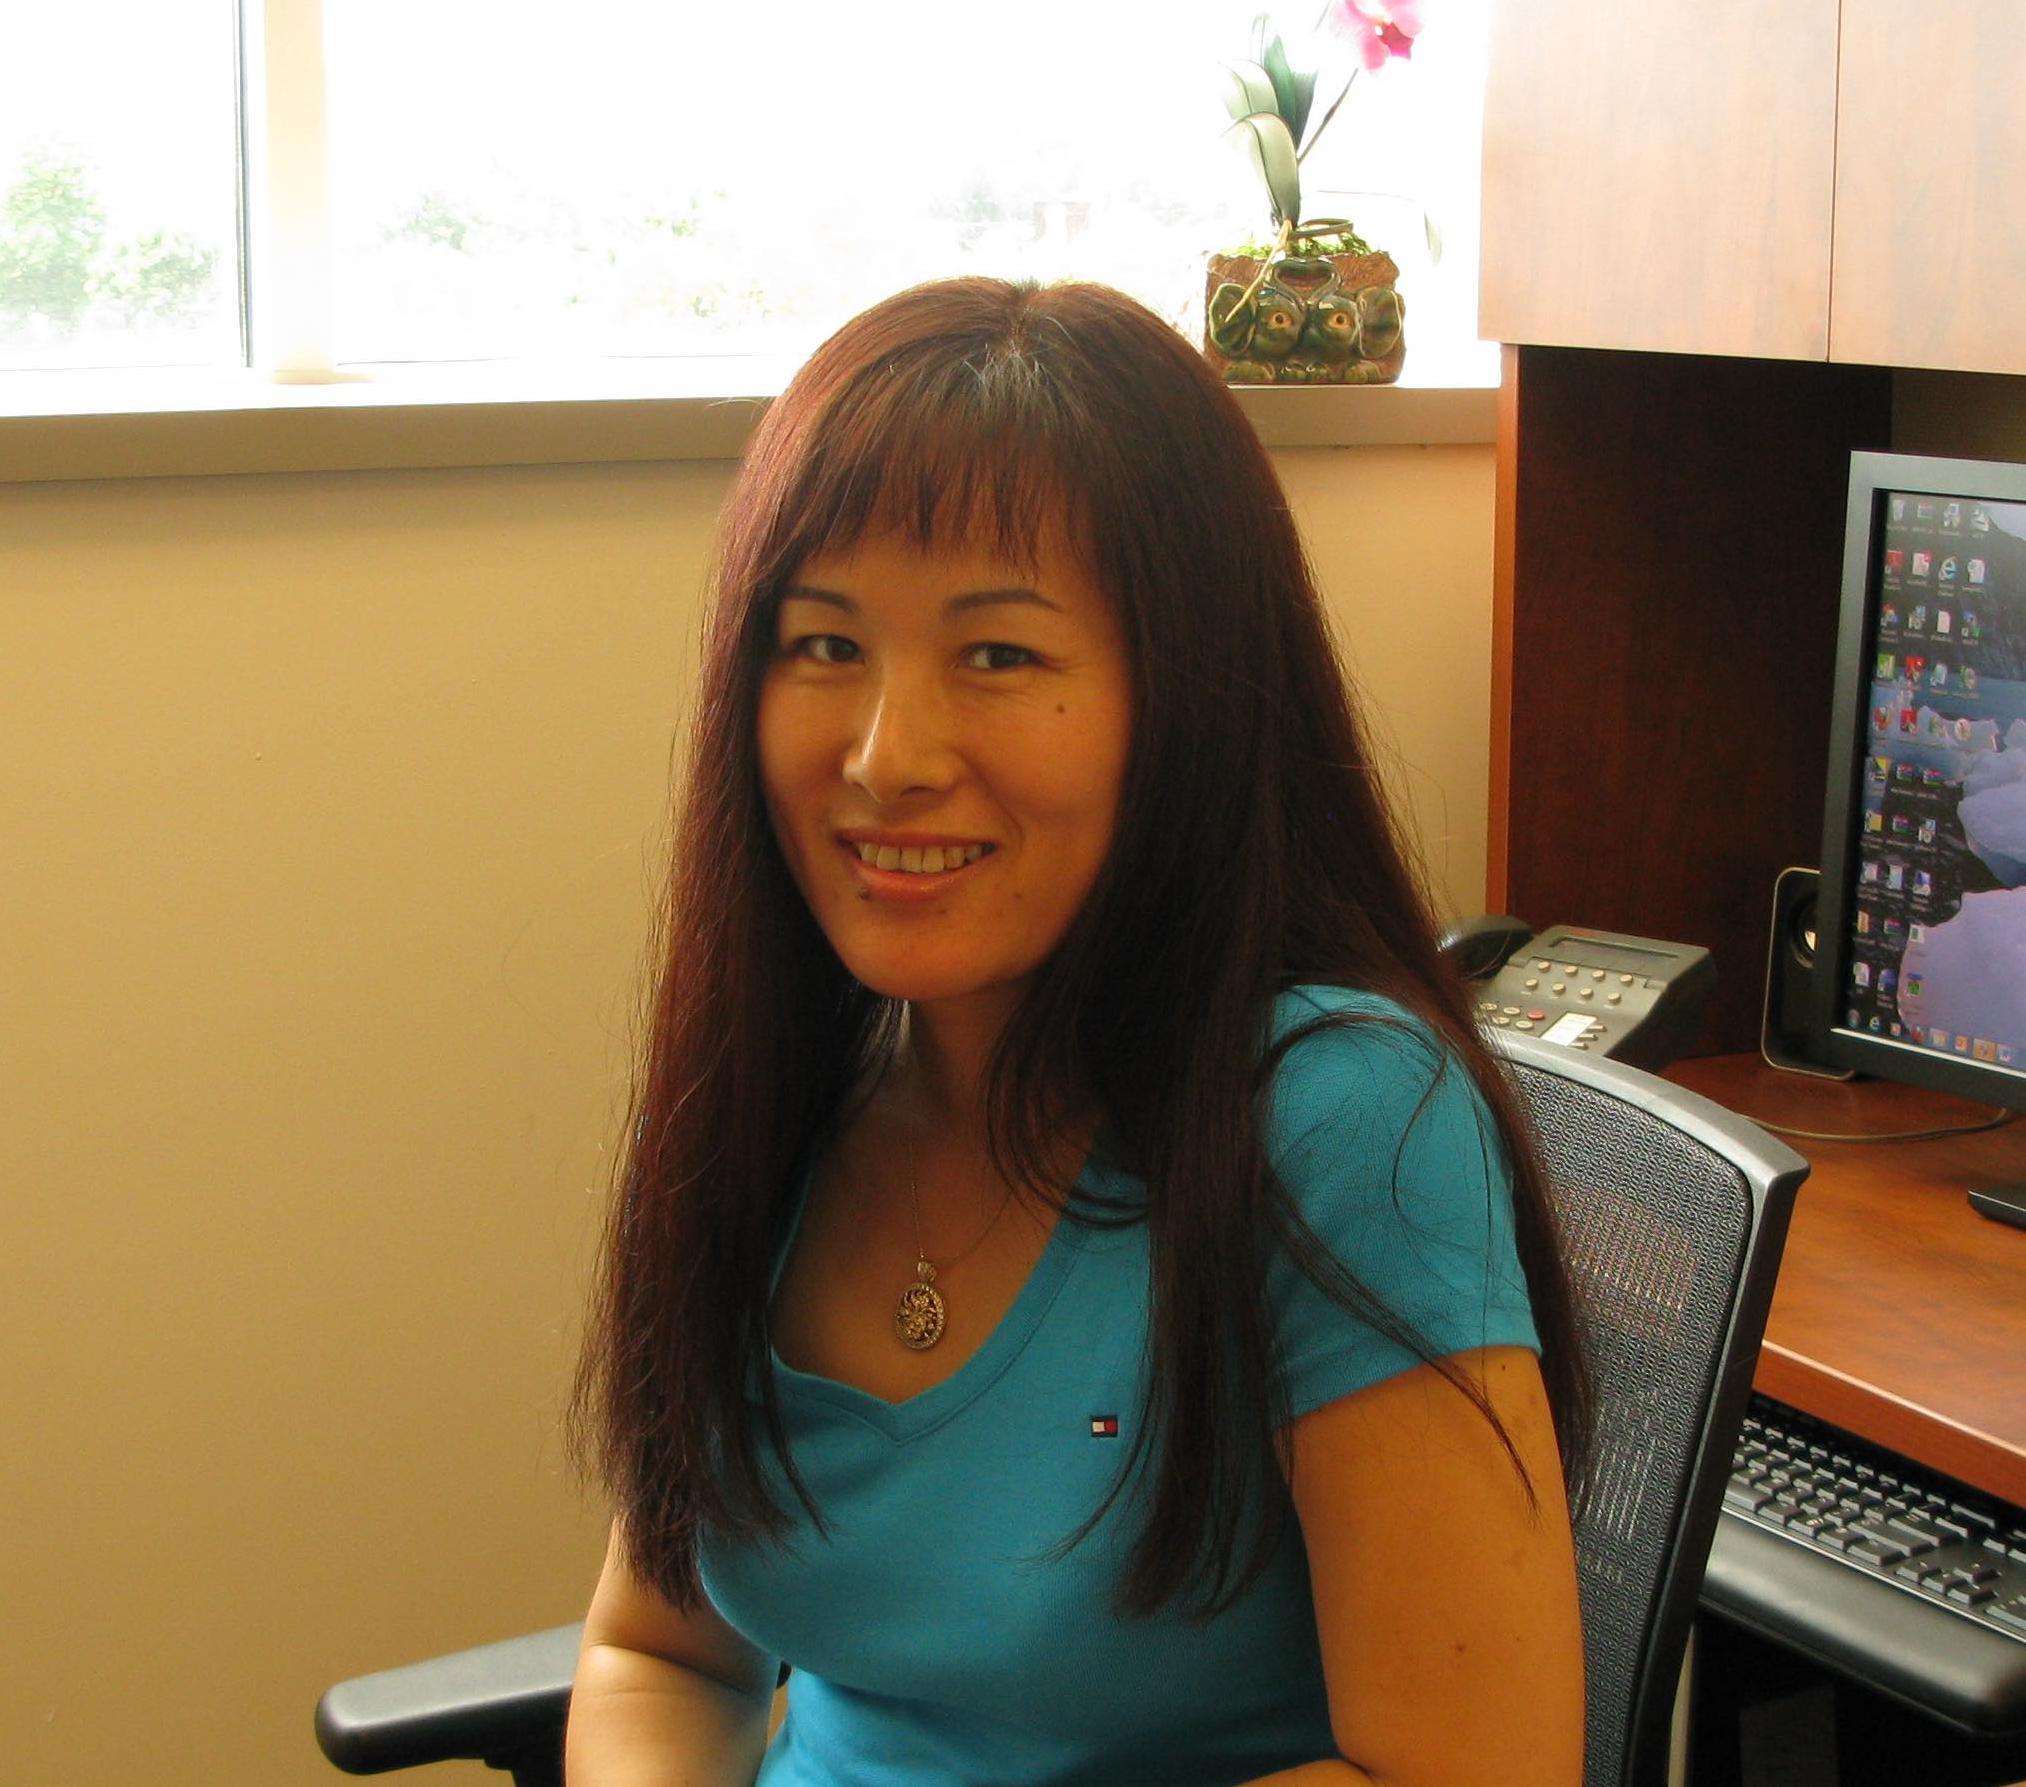 Xia Jiang sitting at her desk